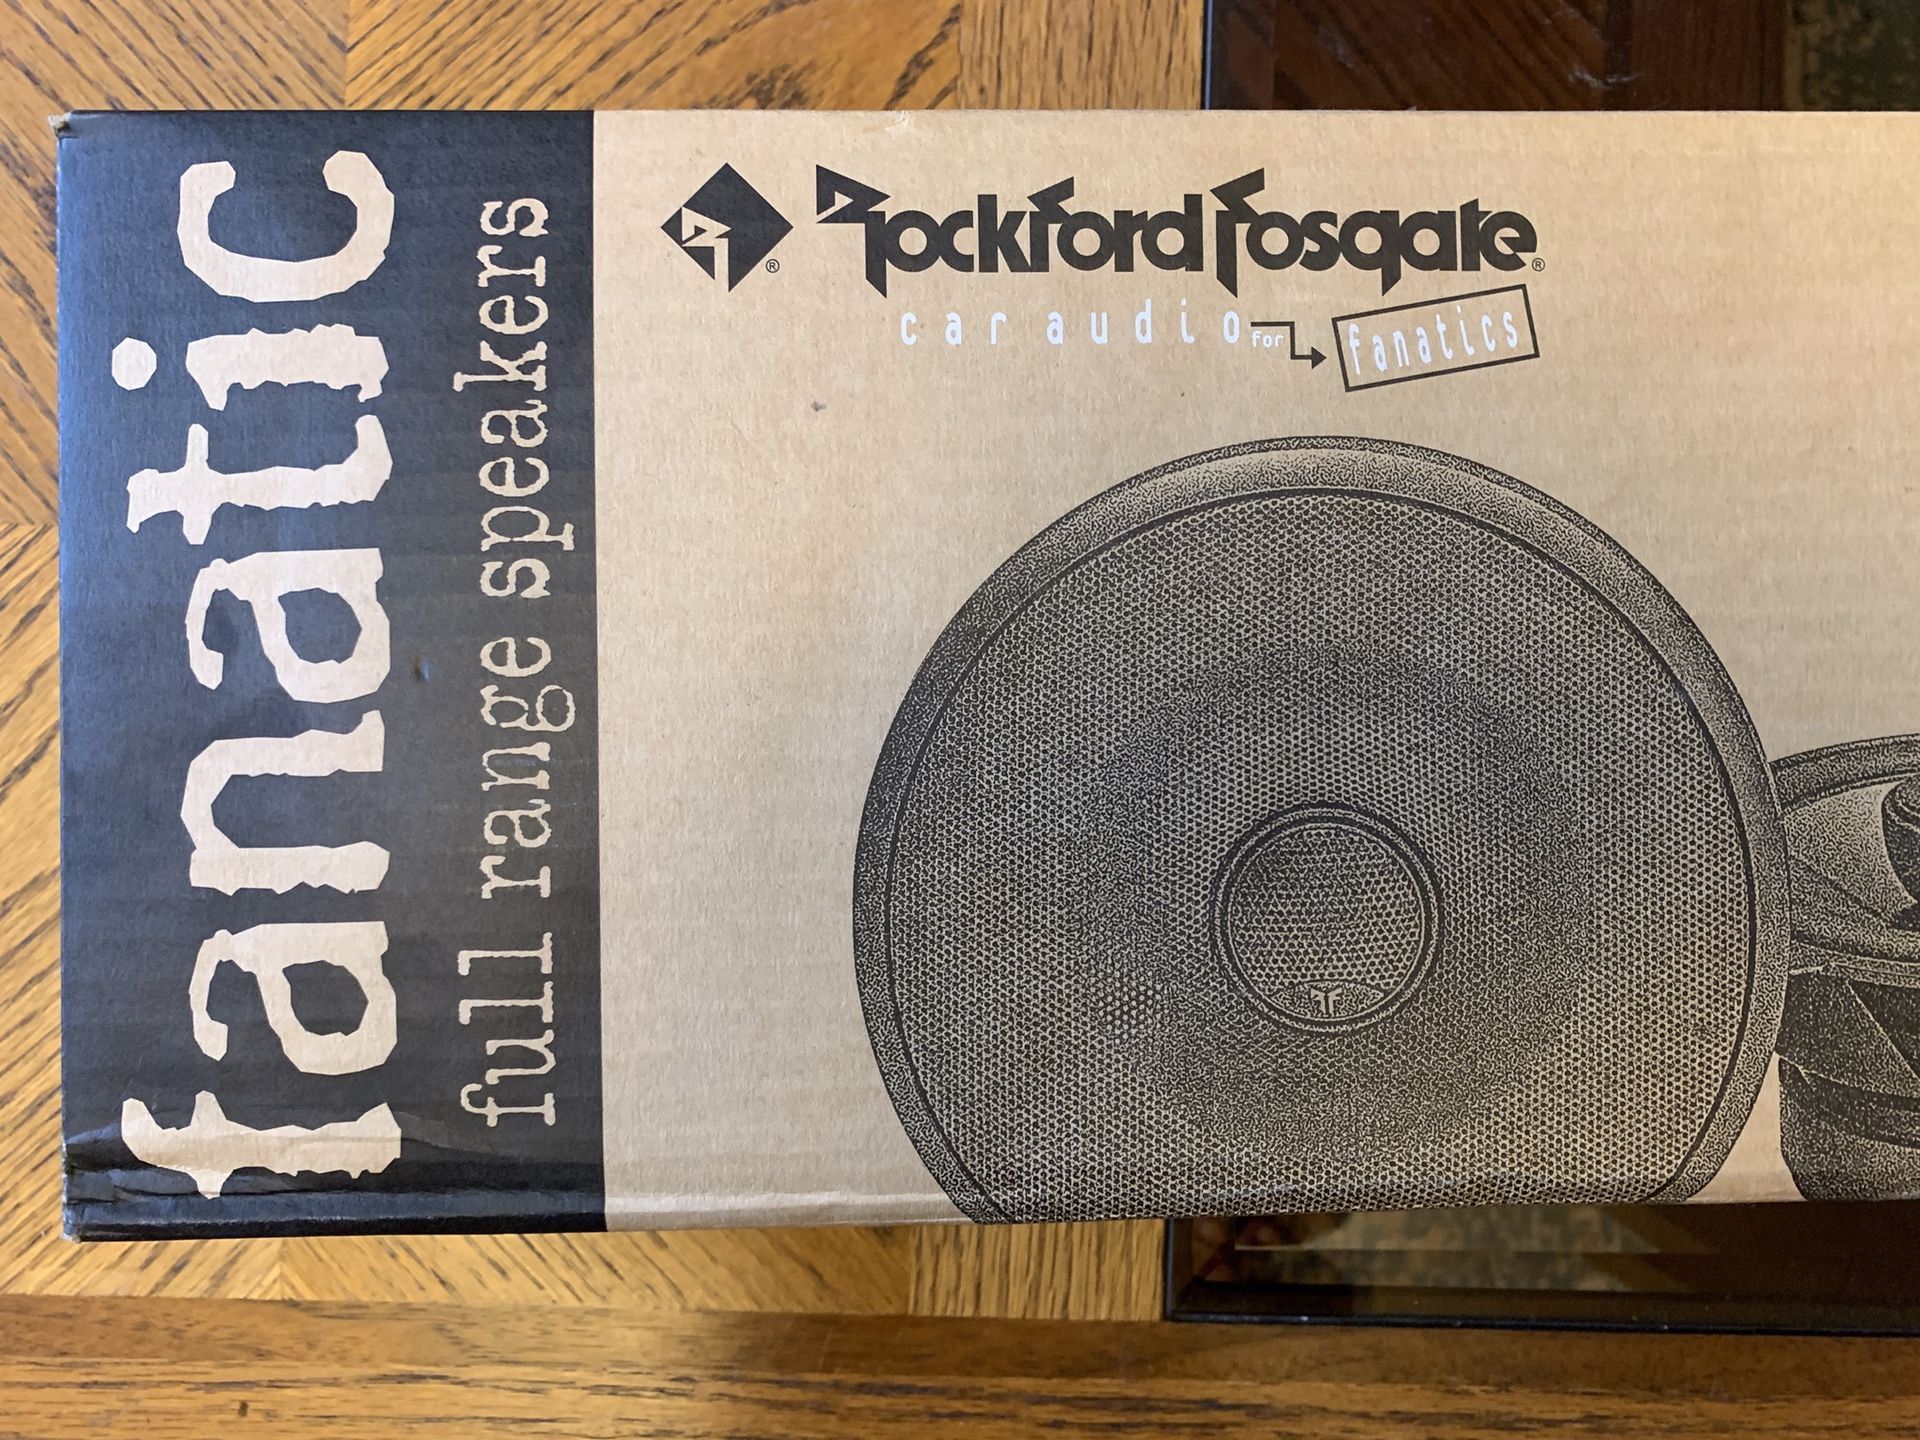 Rockford Fosgate 5.25” Speakers (set of 2pcs) (New)